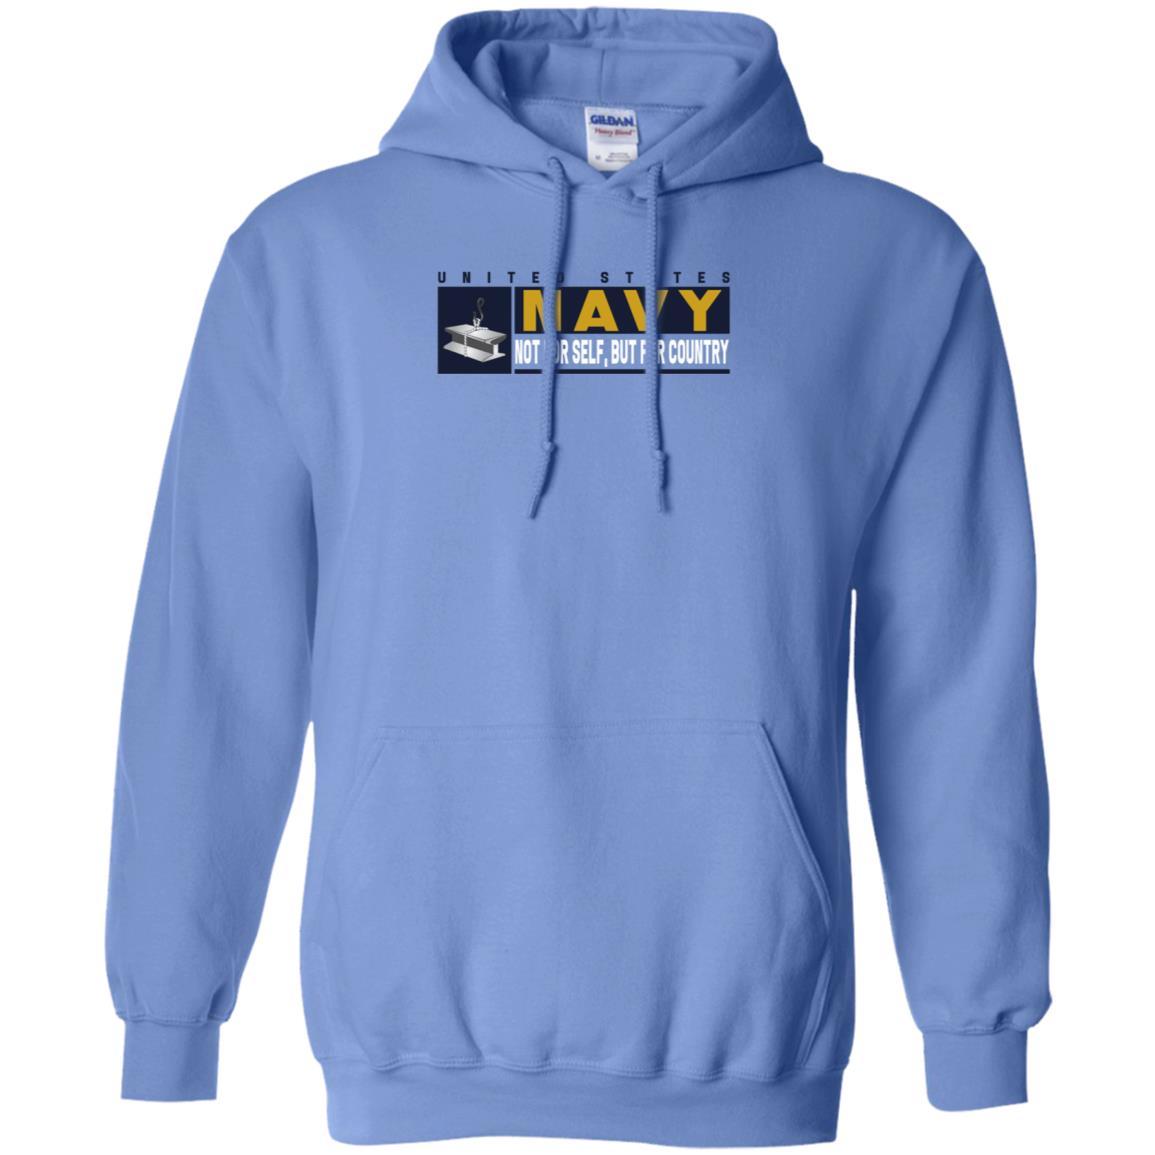 Navy Steelworker Navy SW- Not for self Long Sleeve - Pullover Hoodie-TShirt-Navy-Veterans Nation